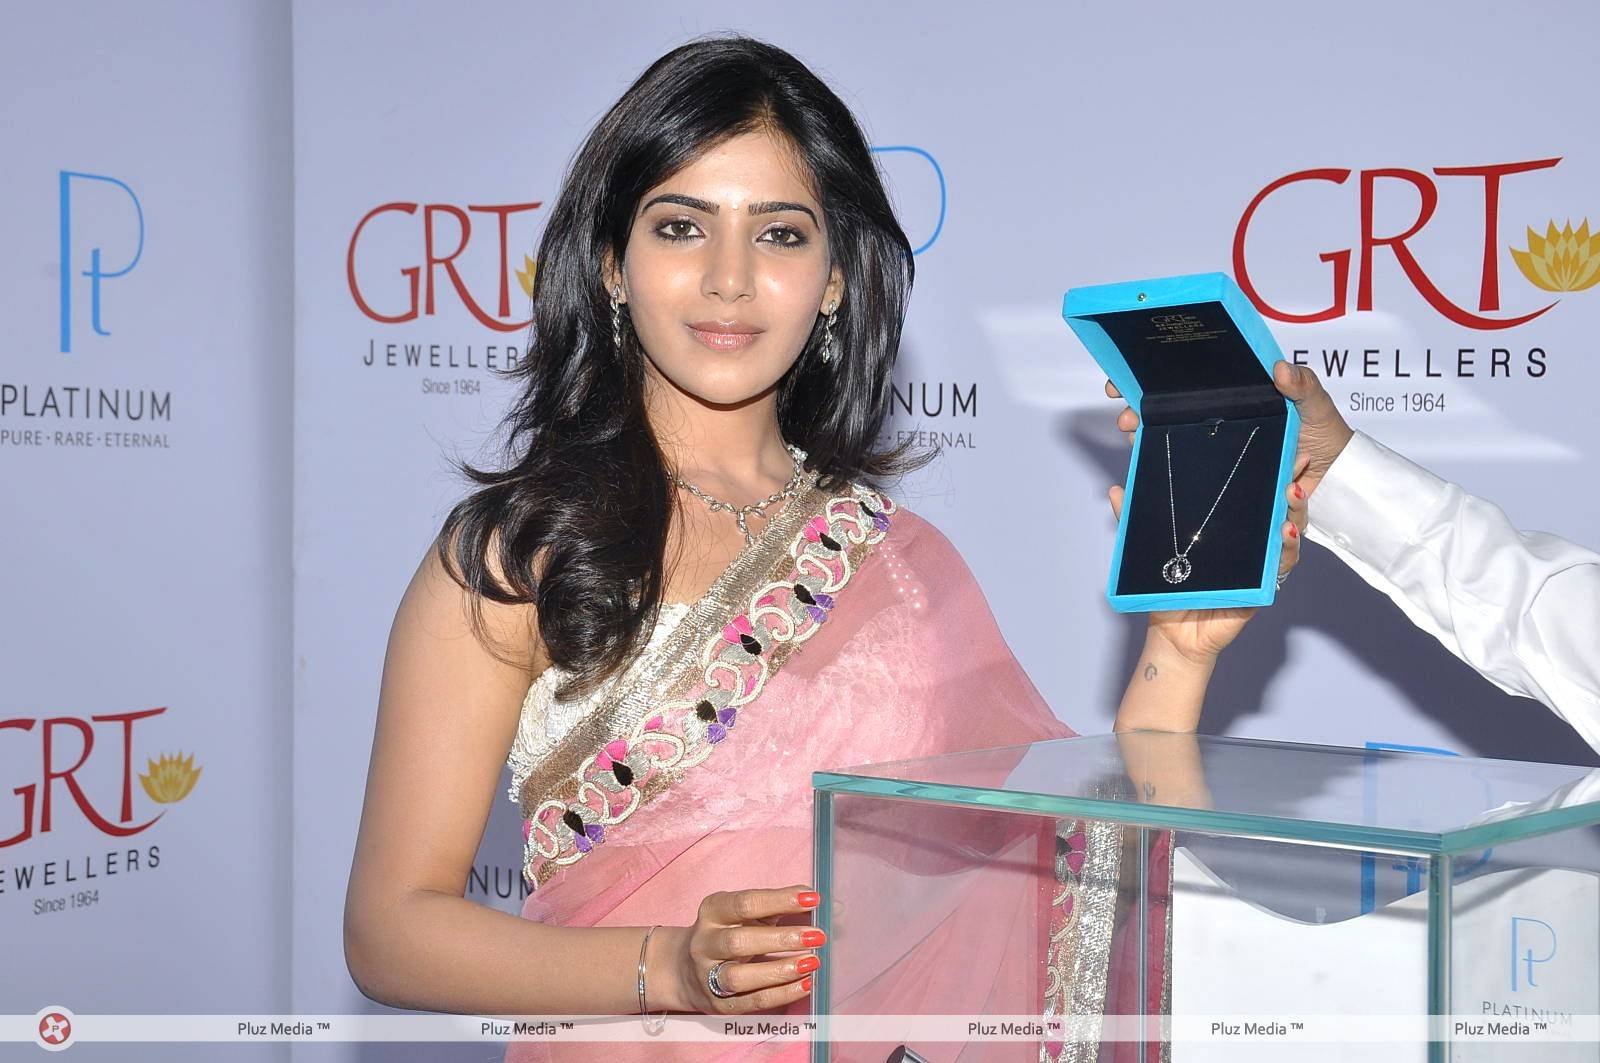 Samantha Ruth Prabhu - Samantha Launches GNT Jewellery Stills | Picture 441067